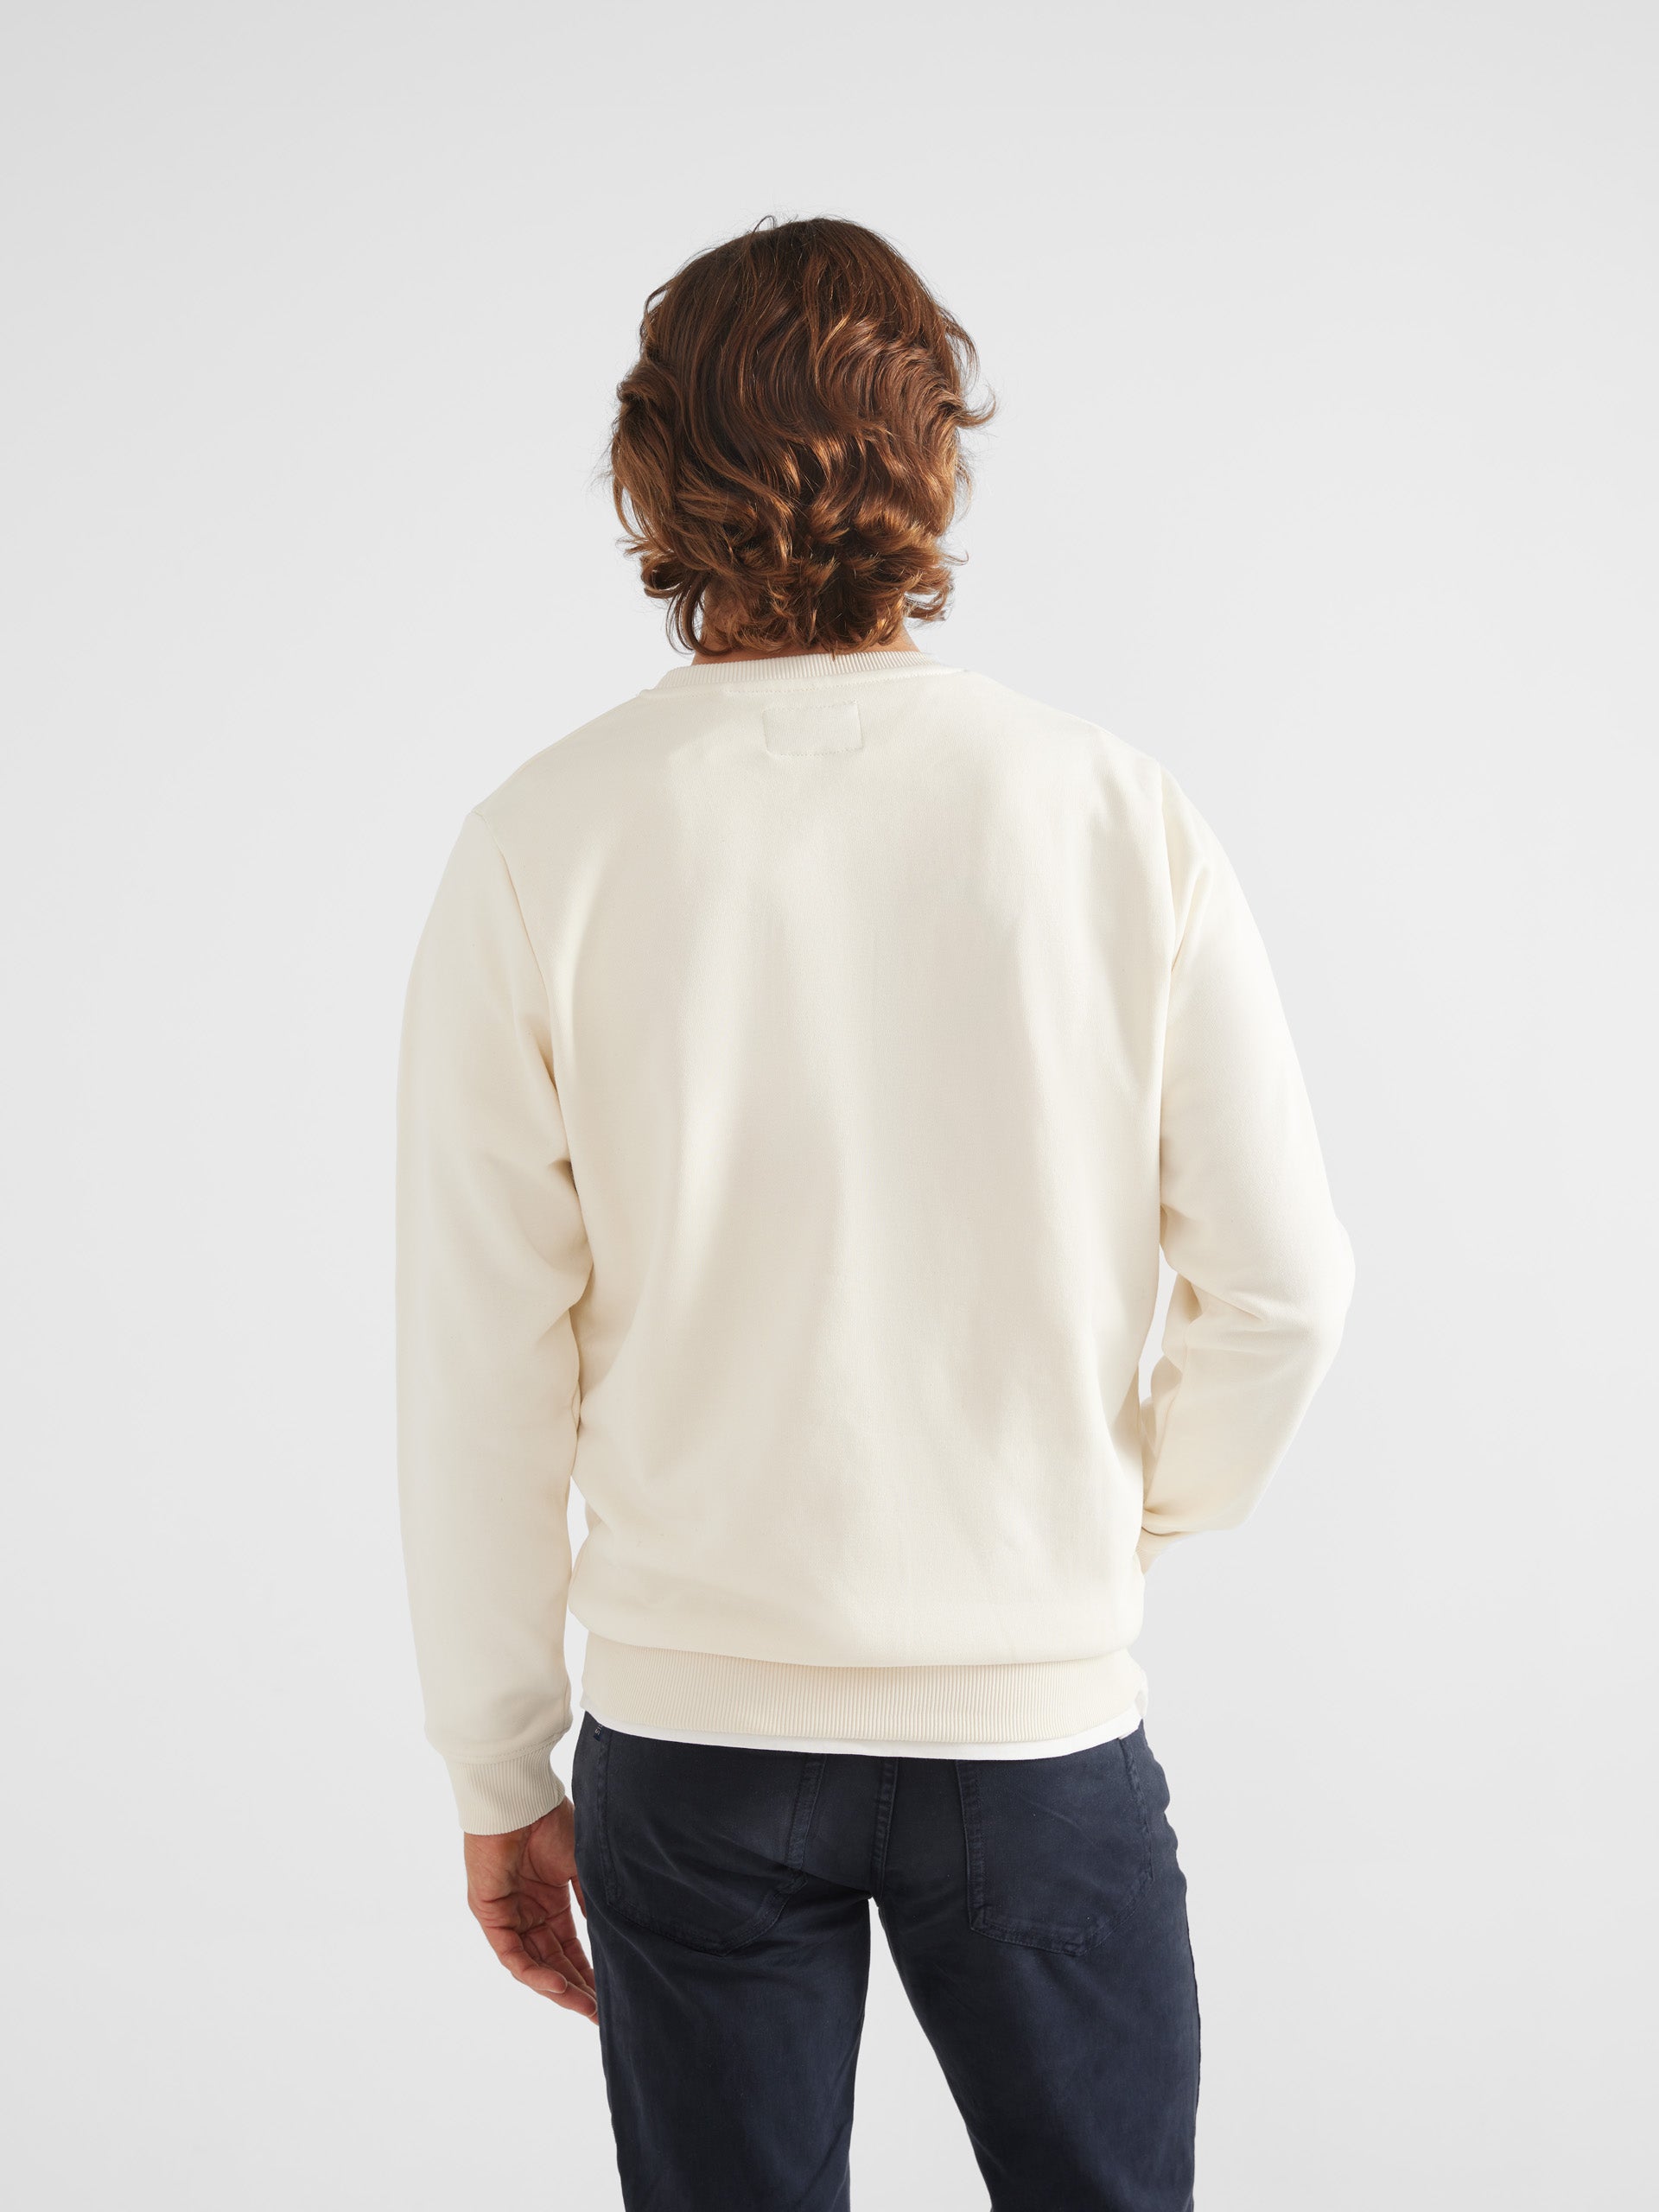 Classic cream logo sweatshirt